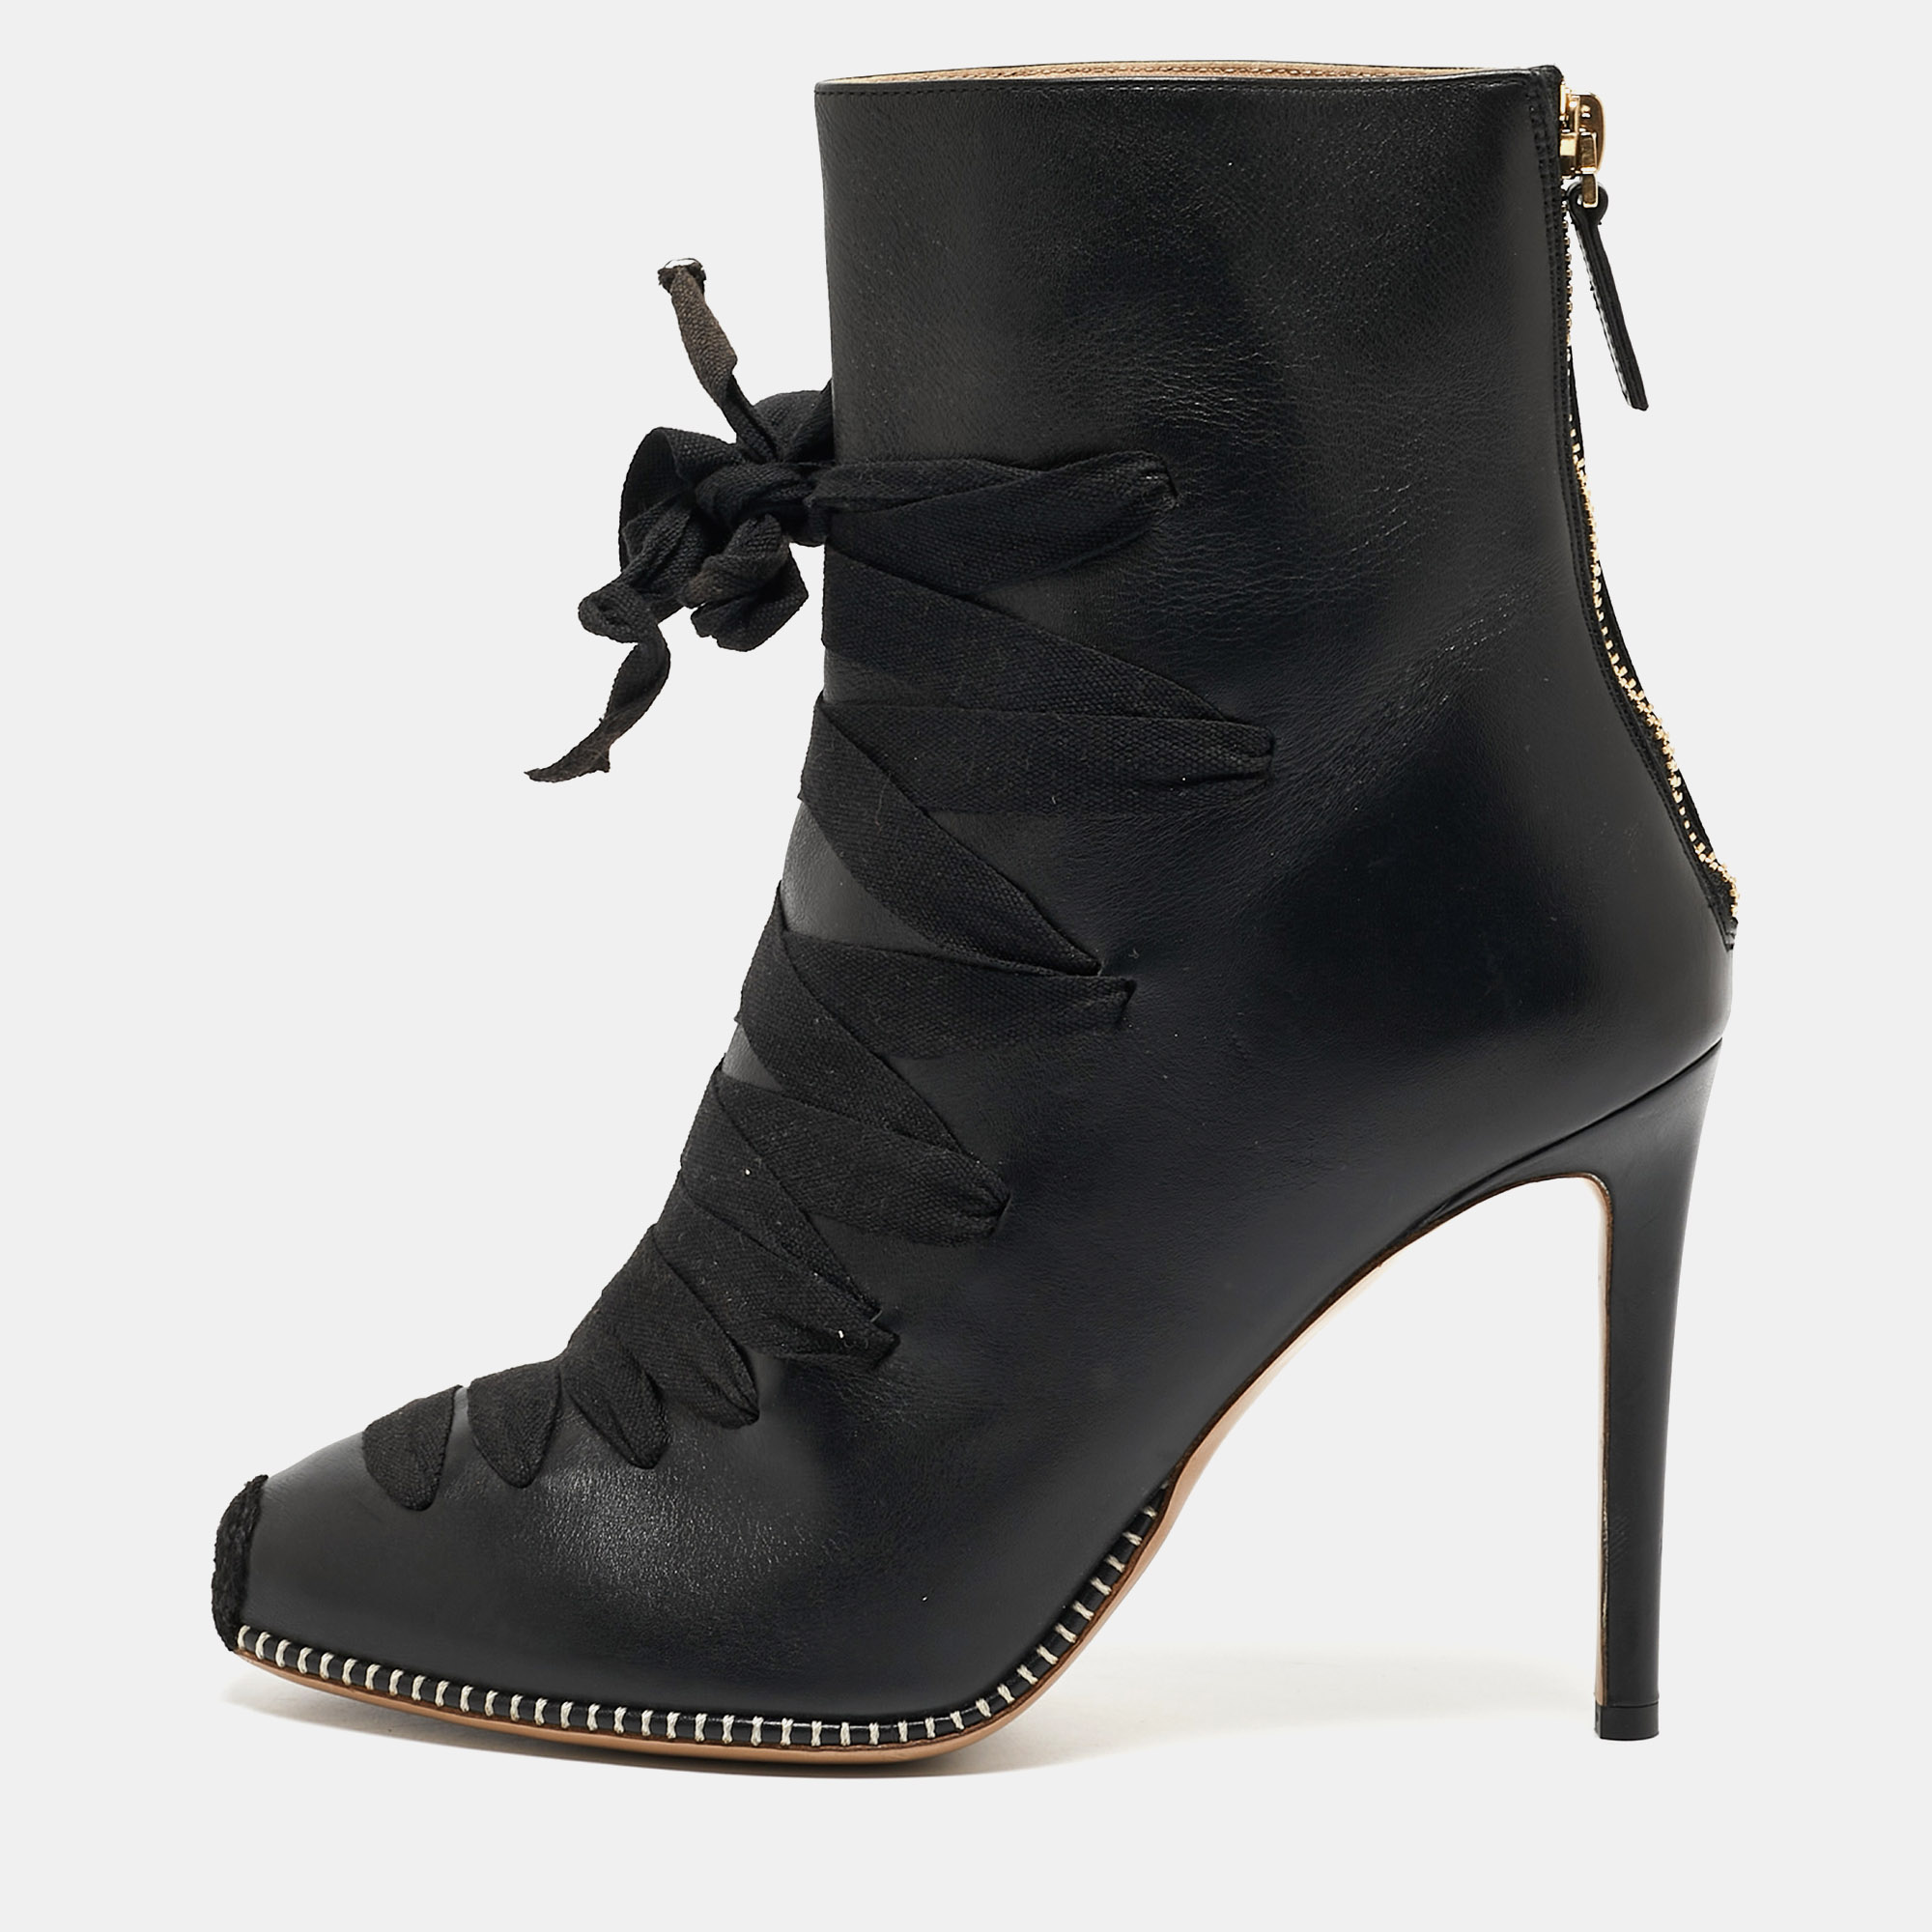 Altuzarra black leather ankle boots size 39